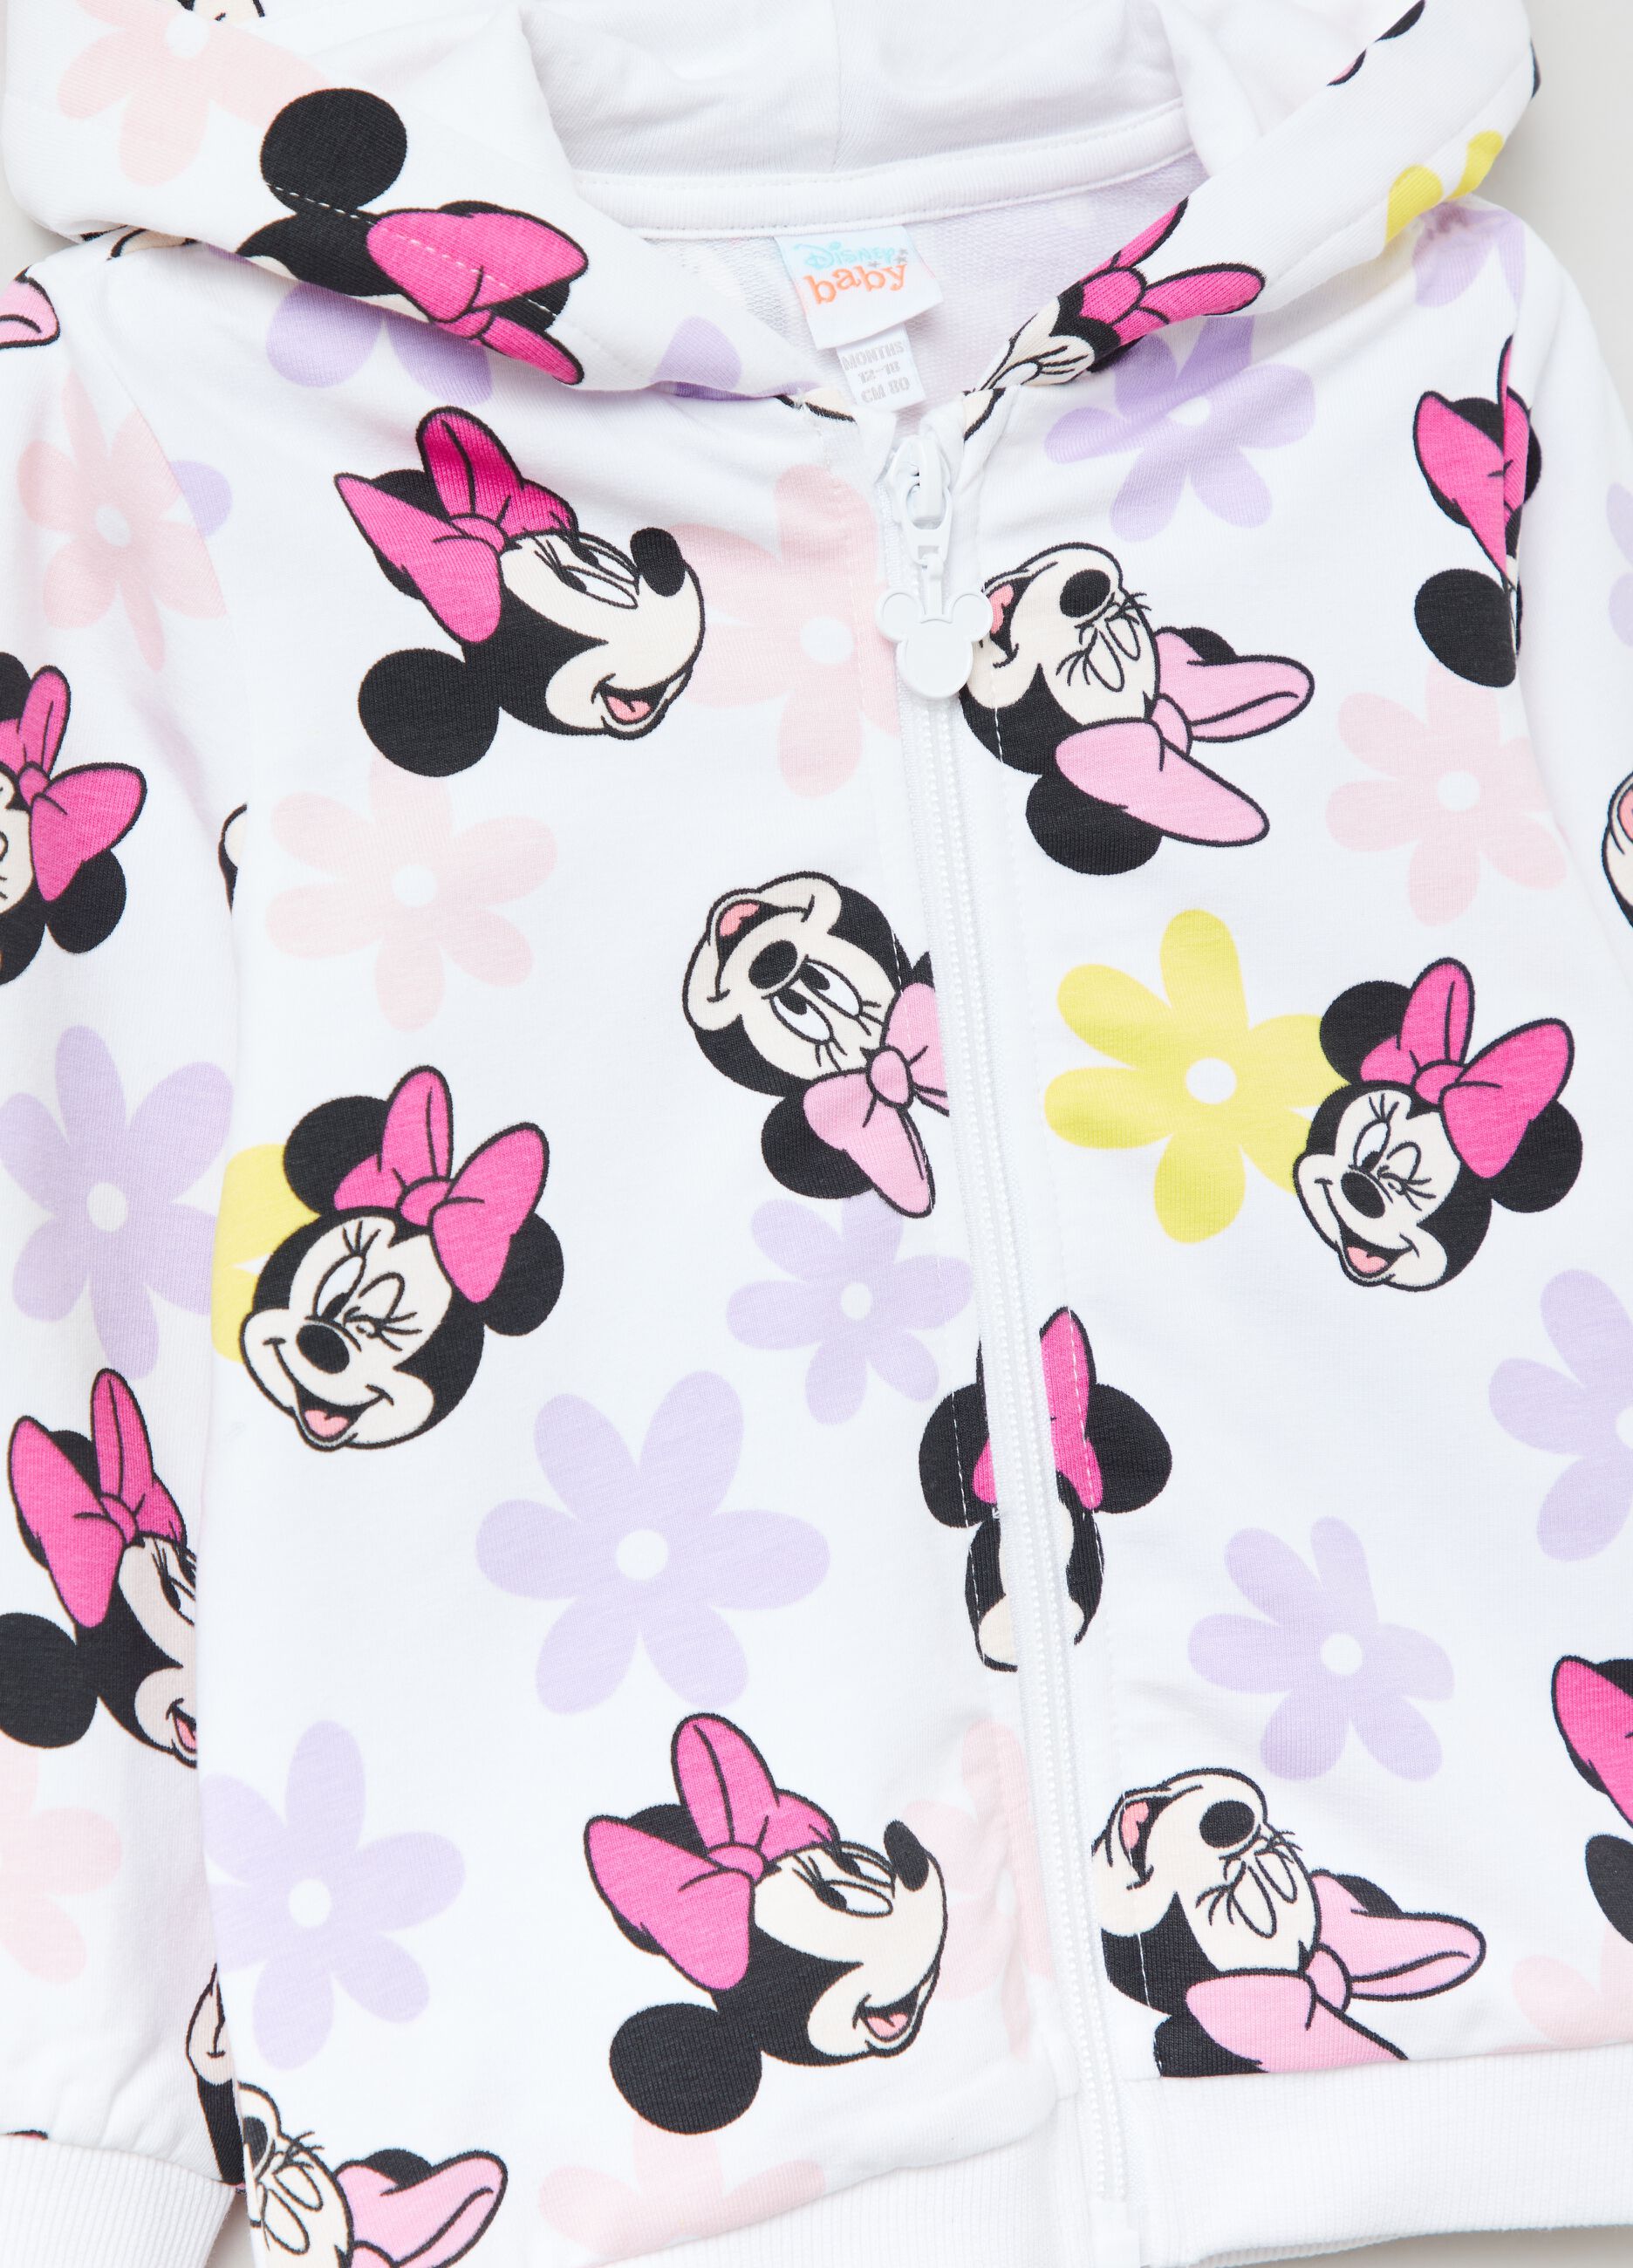 Full-zip with Disney Baby Minnie print